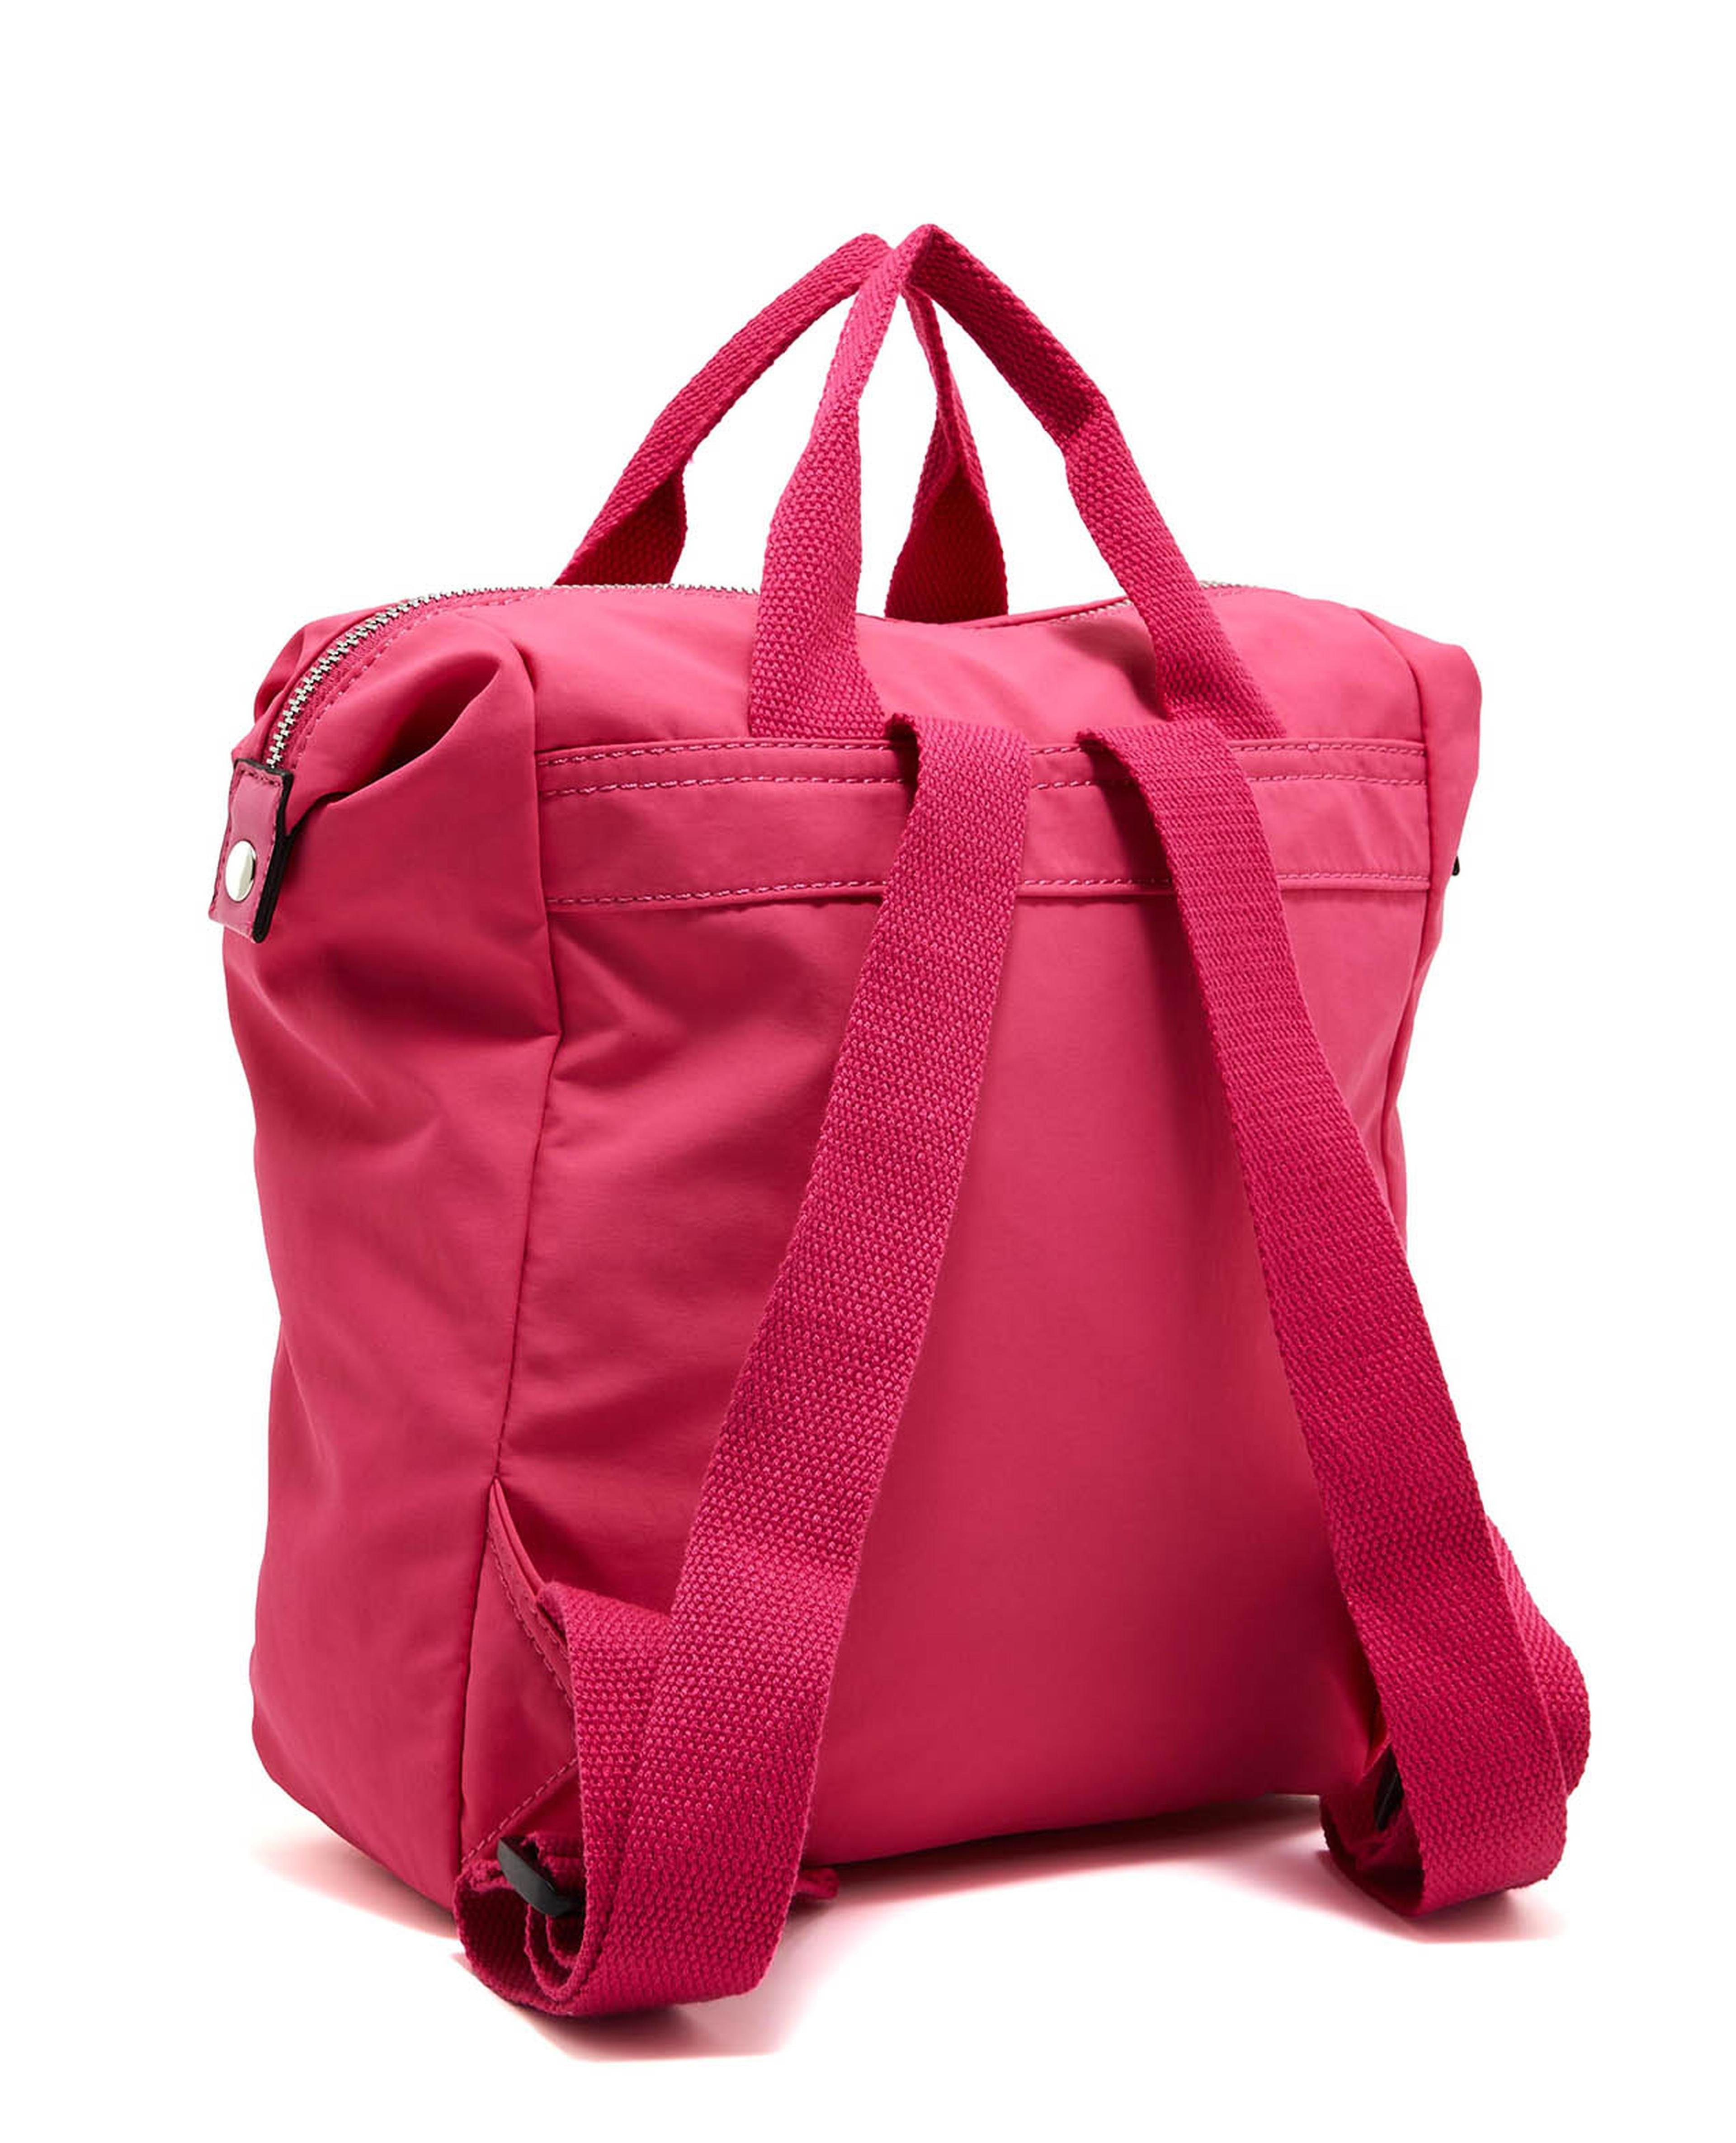 2-In-1 Top Handle Backpack